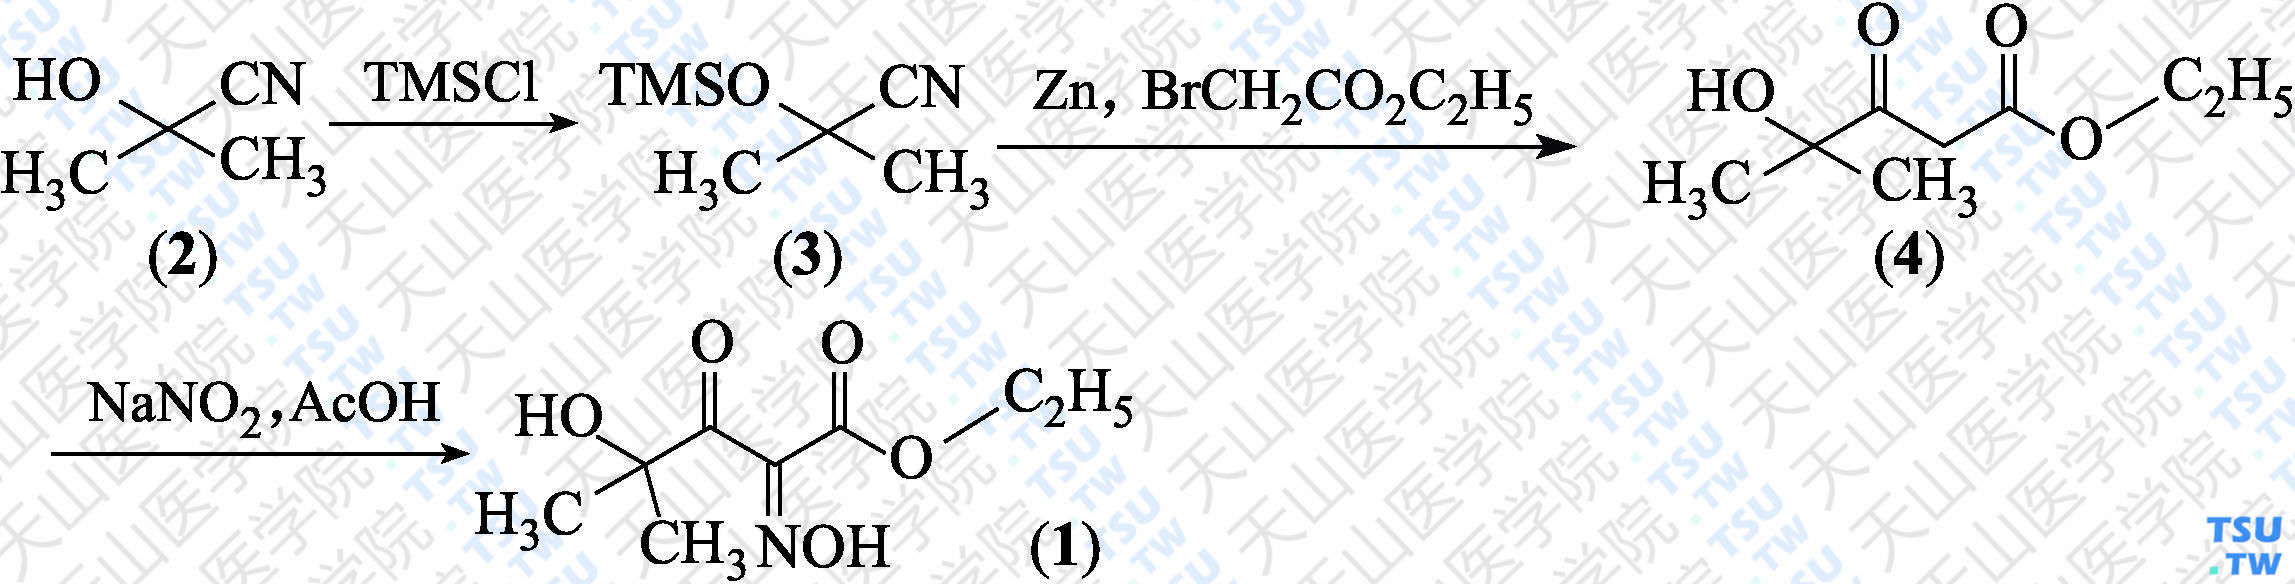 2-羟亚氨基-4-羟基-4-甲基-3-氧代戊酸乙酯（分子式：C<sub>8</sub>H<sub>13</sub>NO<sub>5</sub>）的合成方法路线及其结构式